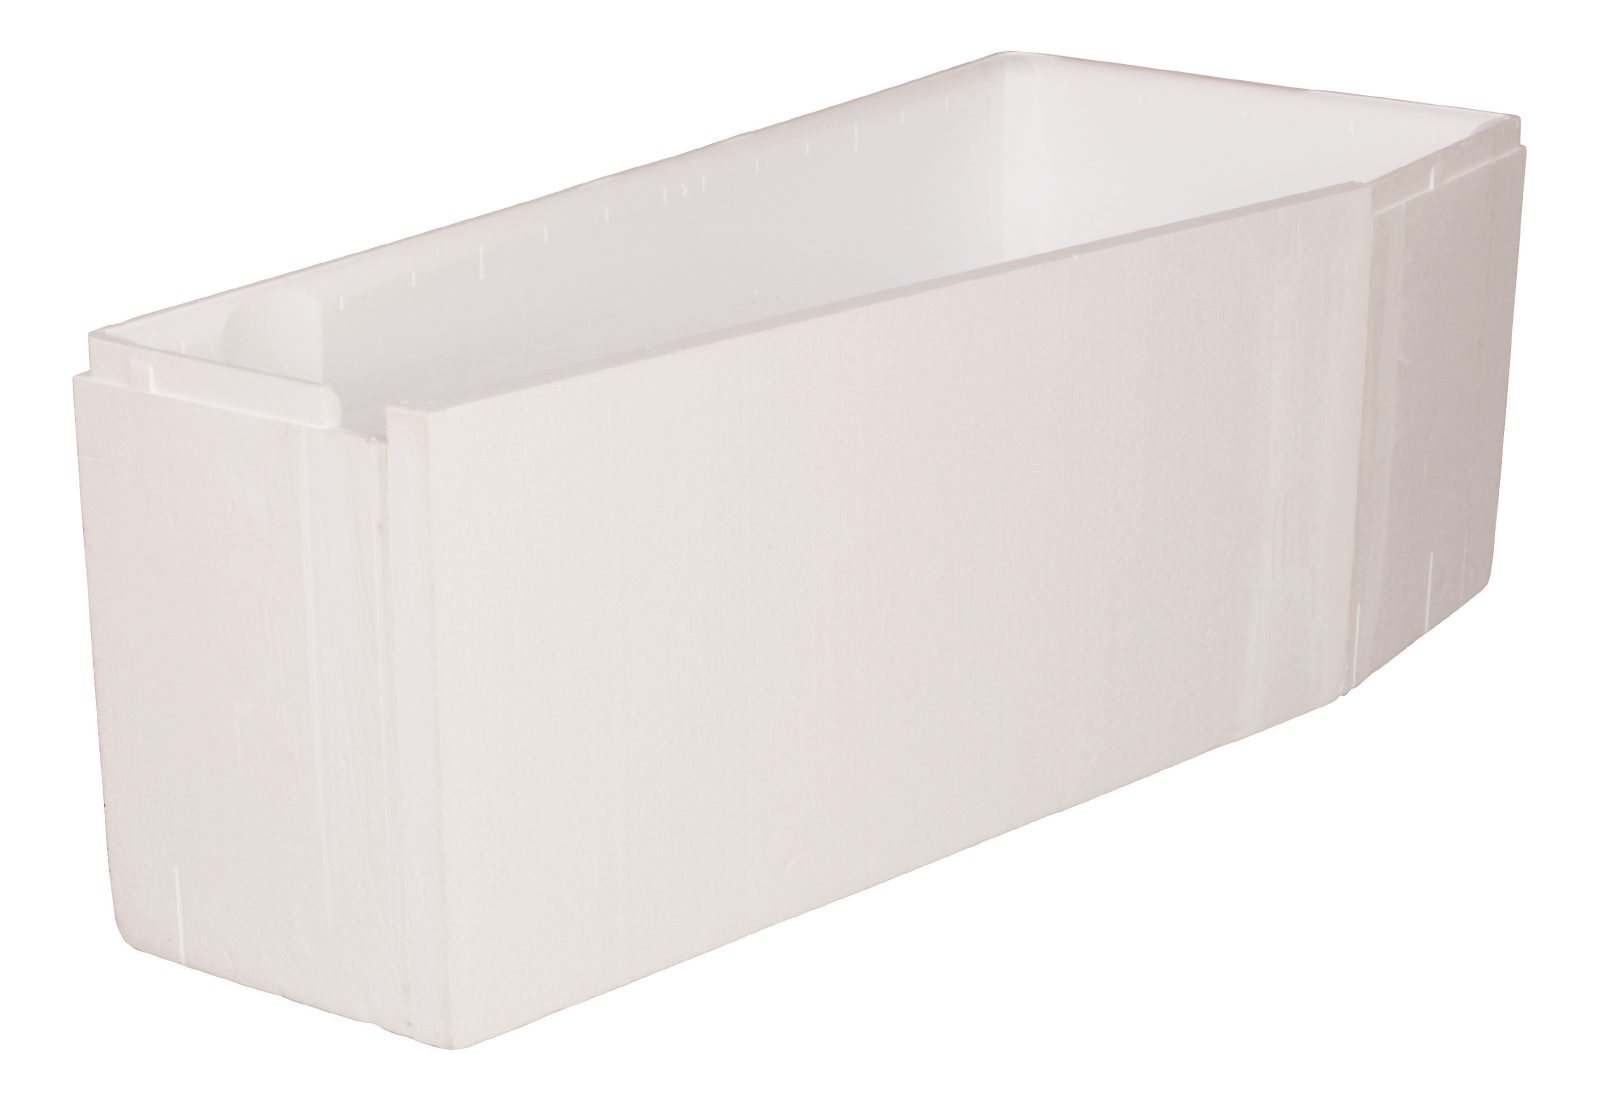 Wannenträger Essential Small in Weiß, linke Ausführung, 160 x 70 cm